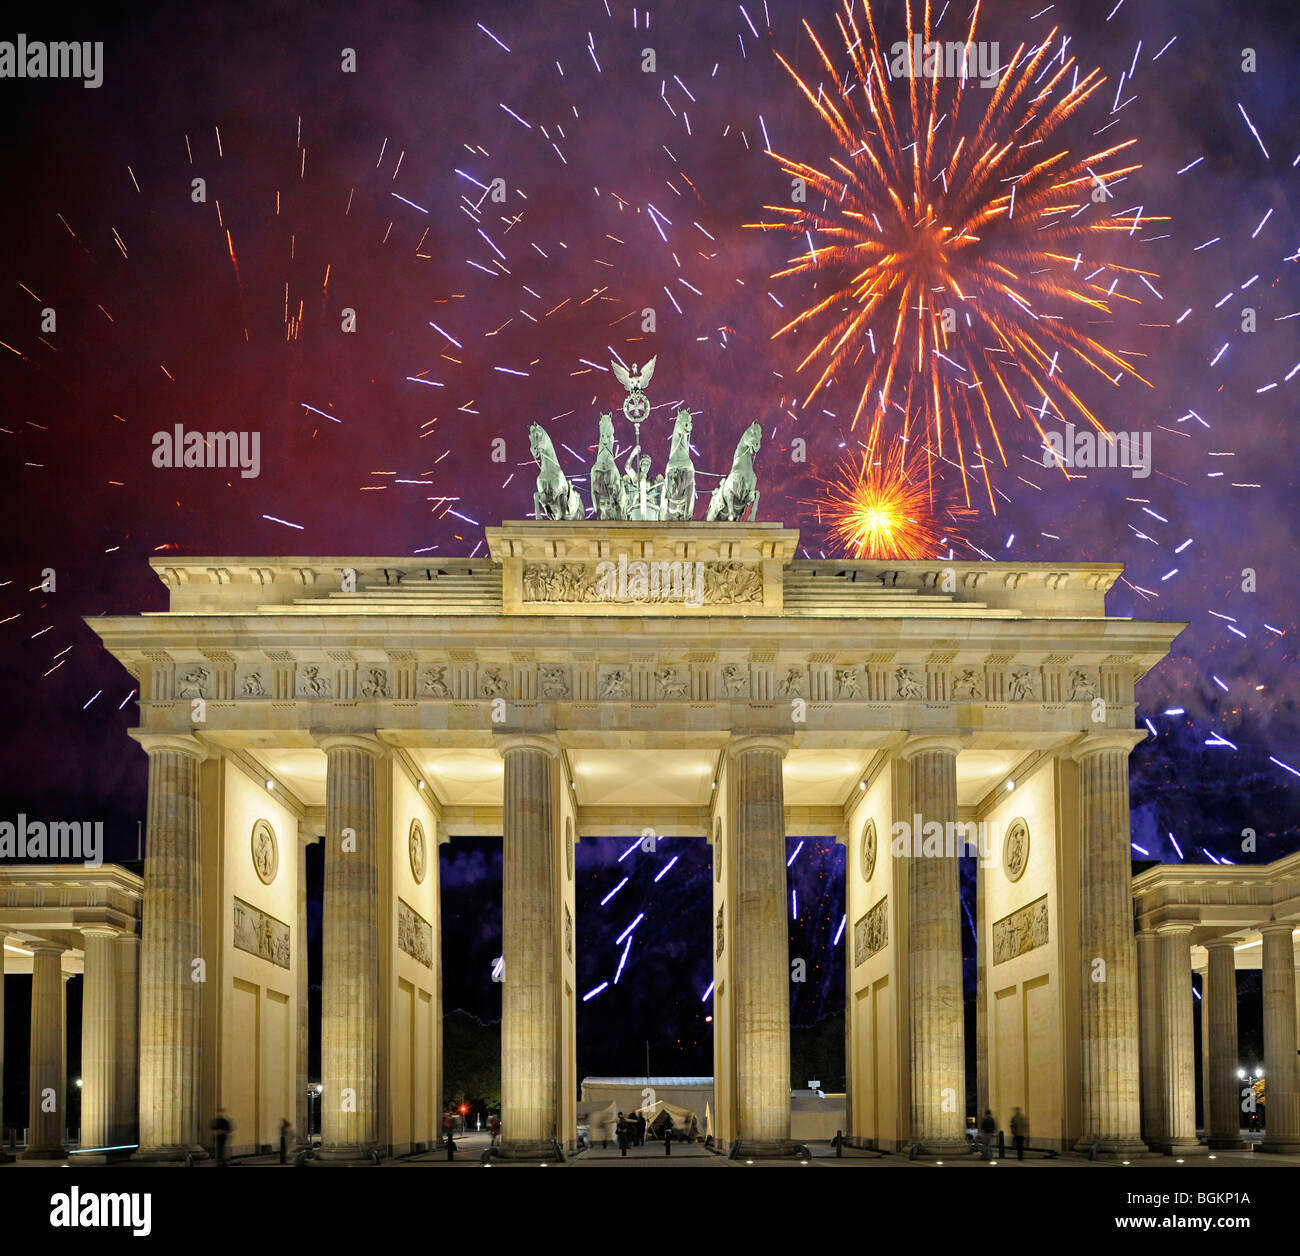 Porte de Brandebourg, Fireworks, Berlin Banque D'Images